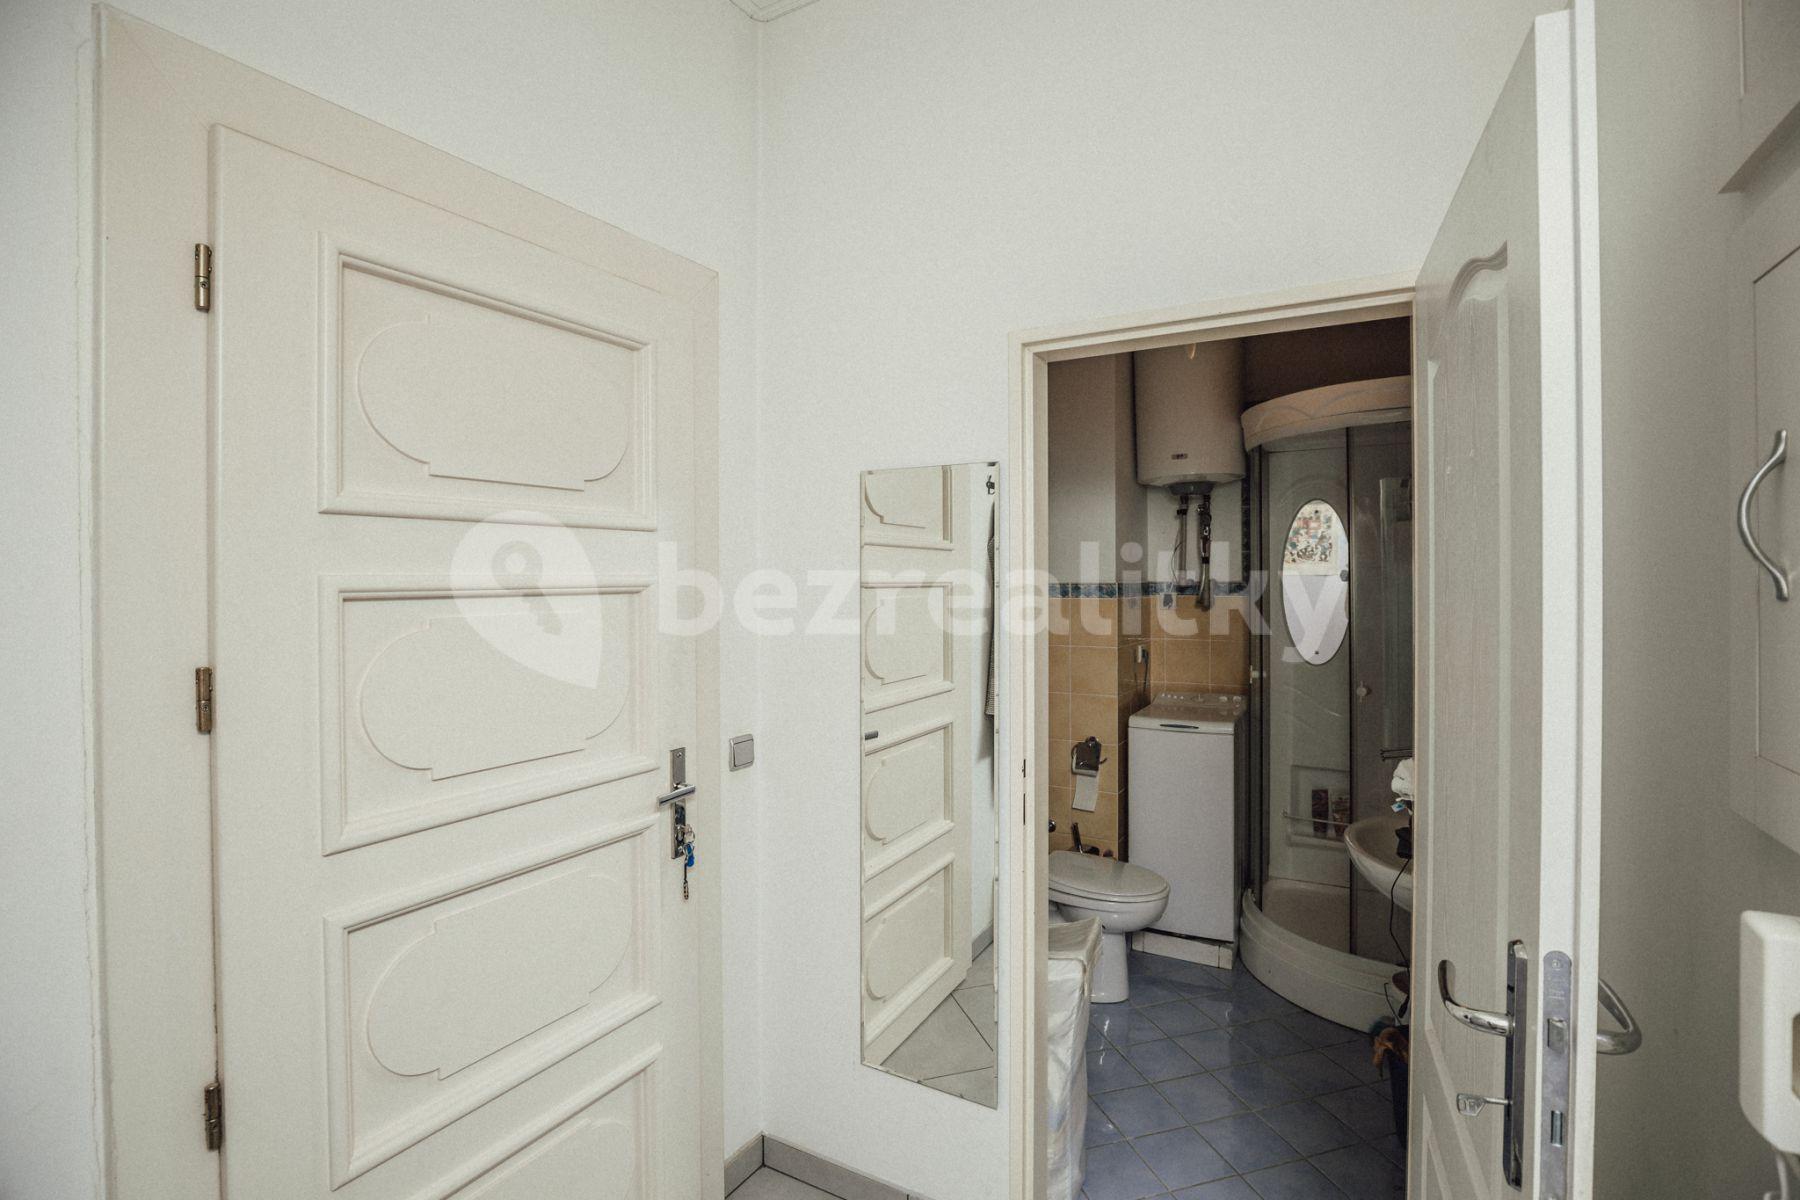 1 bedroom with open-plan kitchen flat to rent, 55 m², Ladova, Prague, Prague